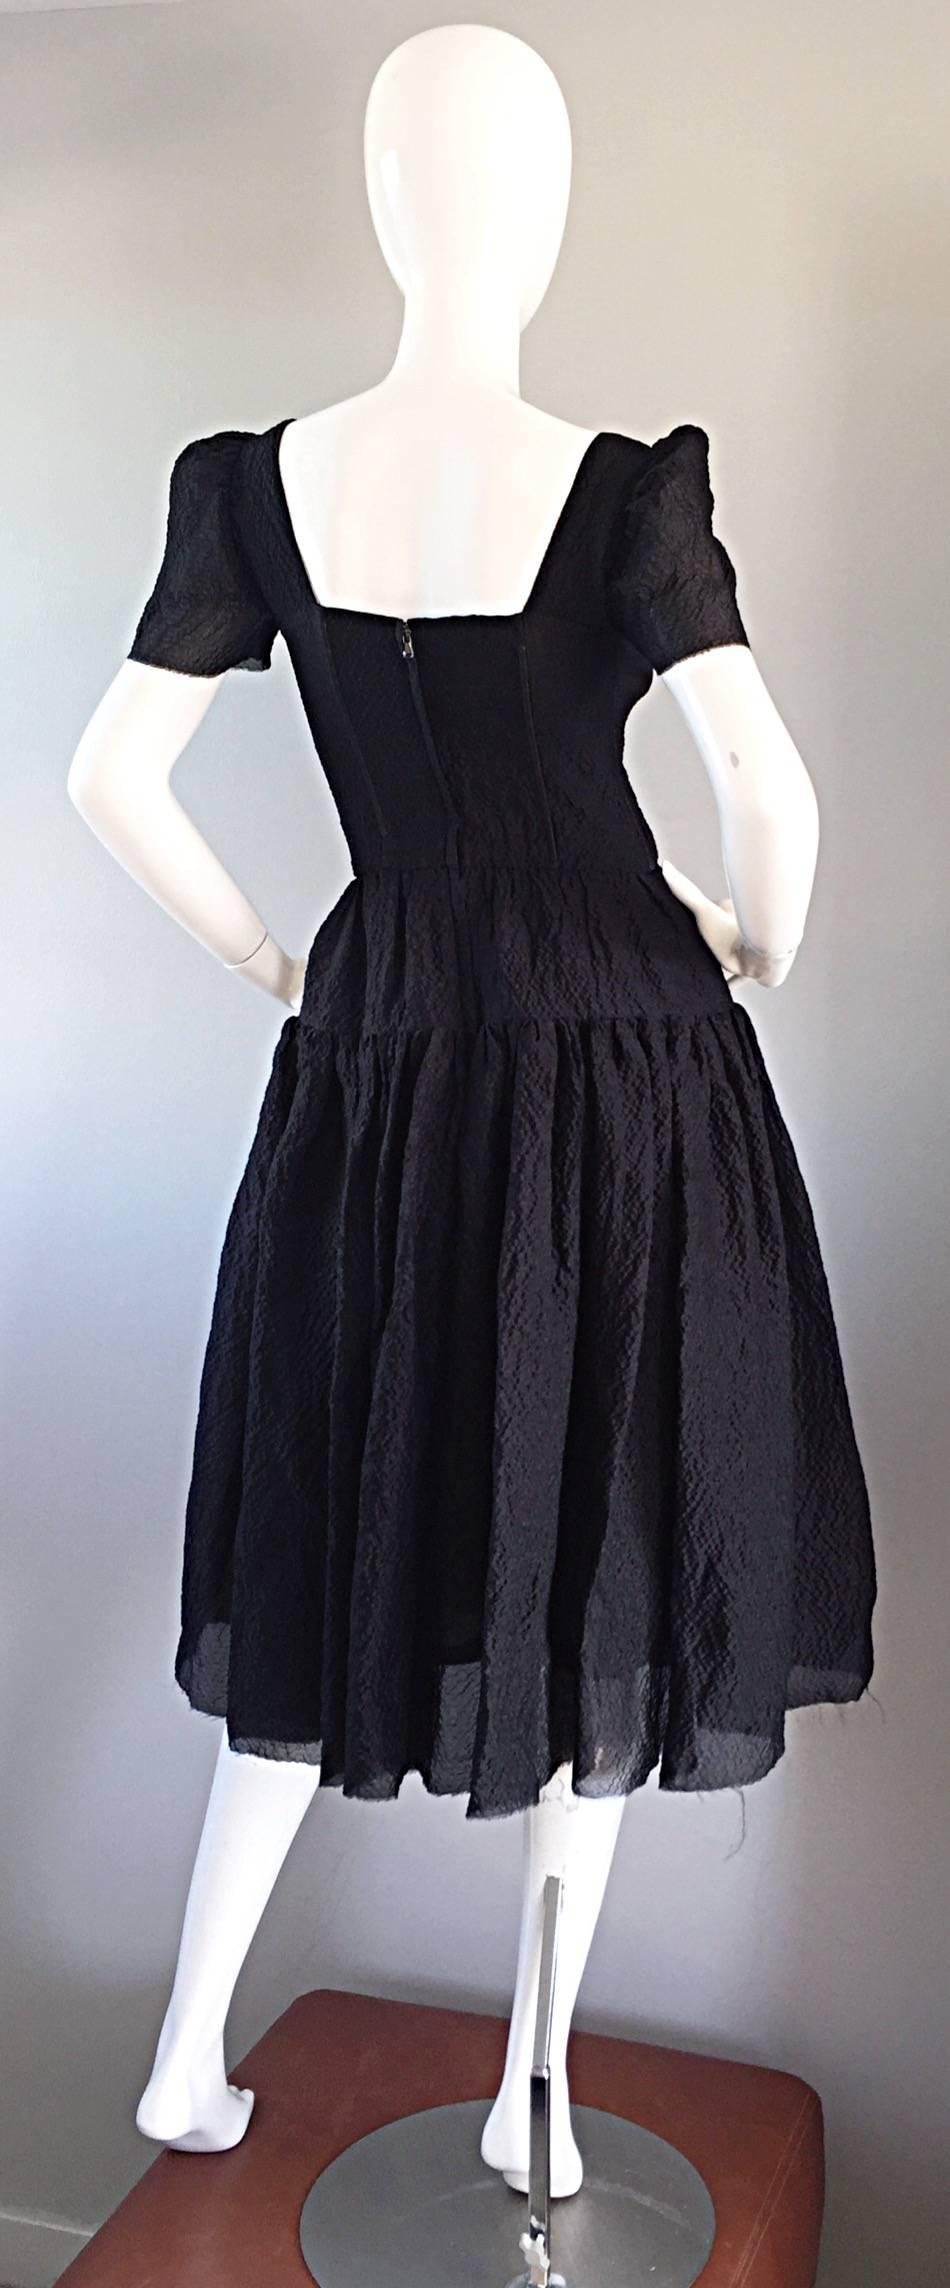 Stunning Dolce & Gabbana Black Silk Sequin Bustier Dress From Spanish Collection 3